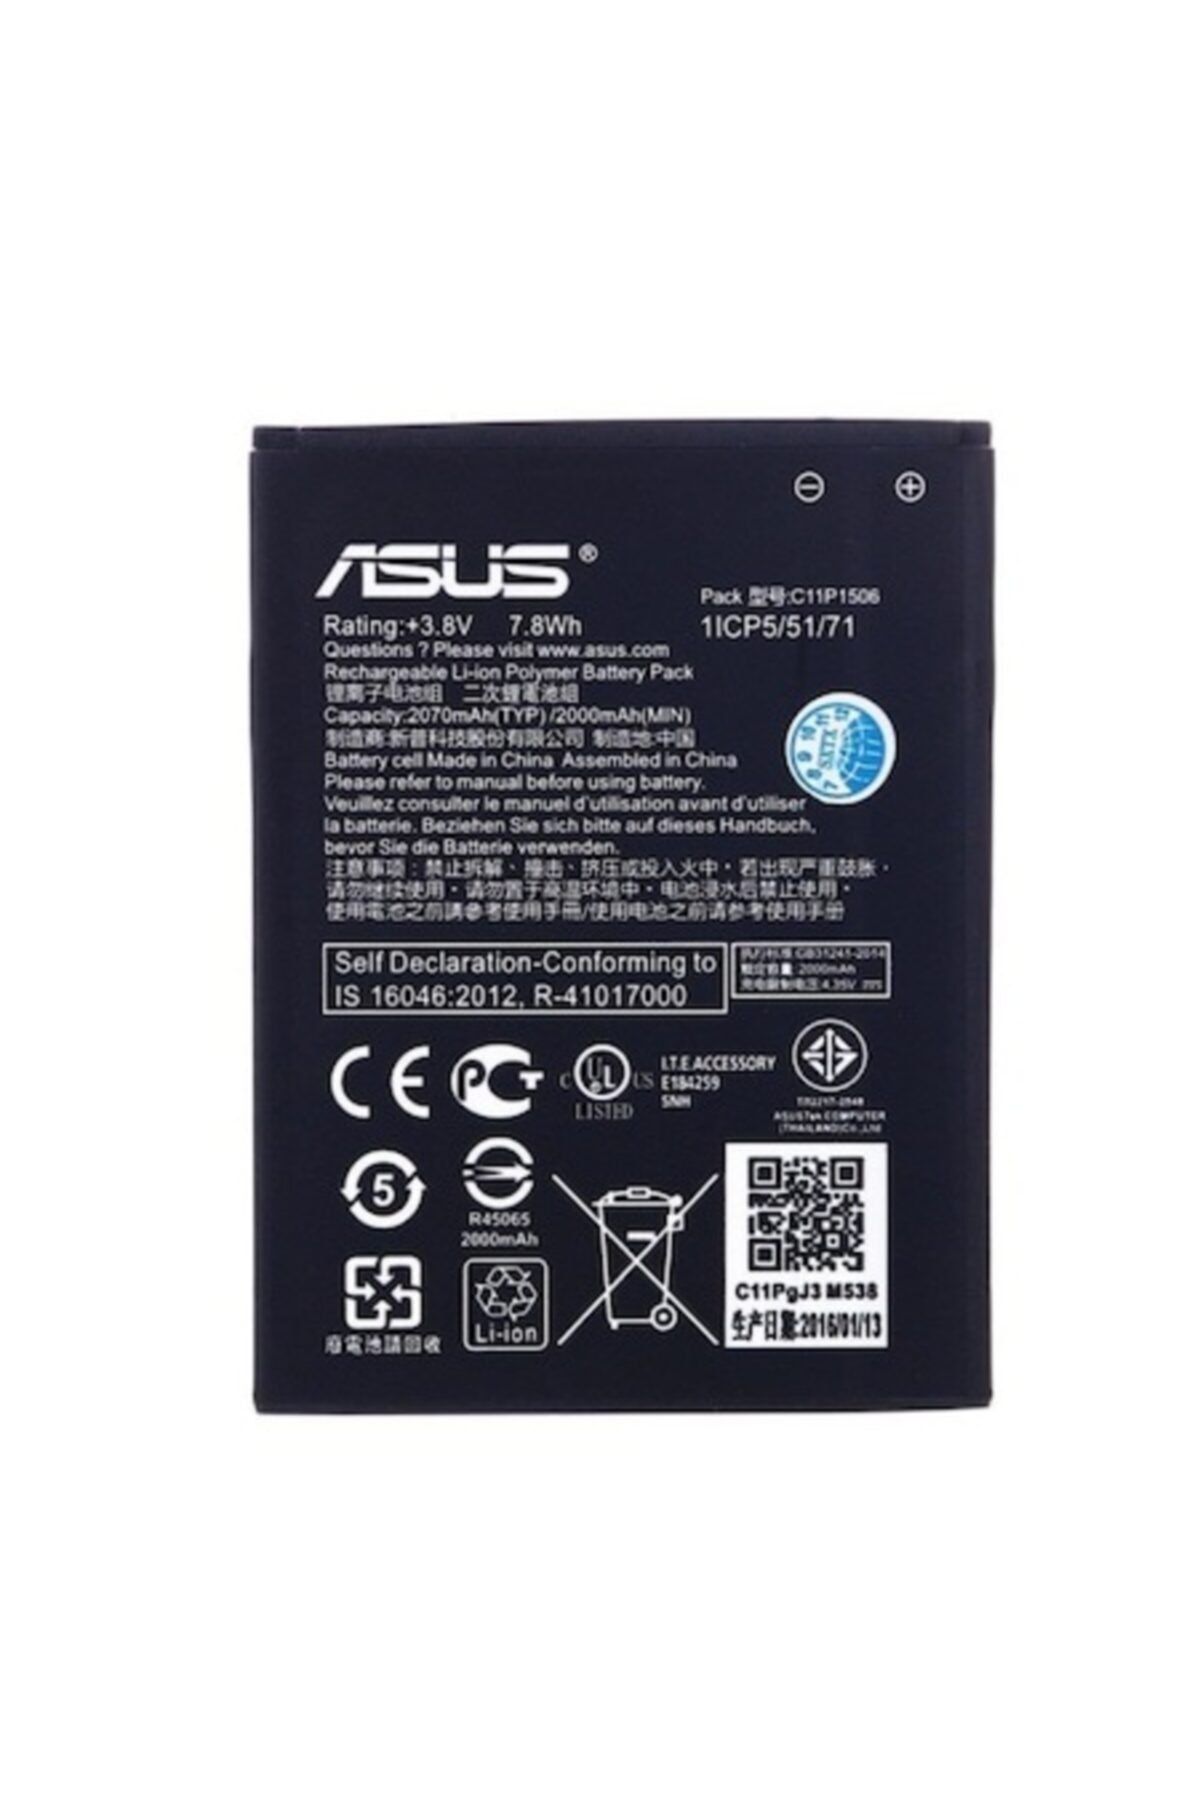 ASUS Zenfone Go 2 Zb500kl Batarya Pil C11p1506